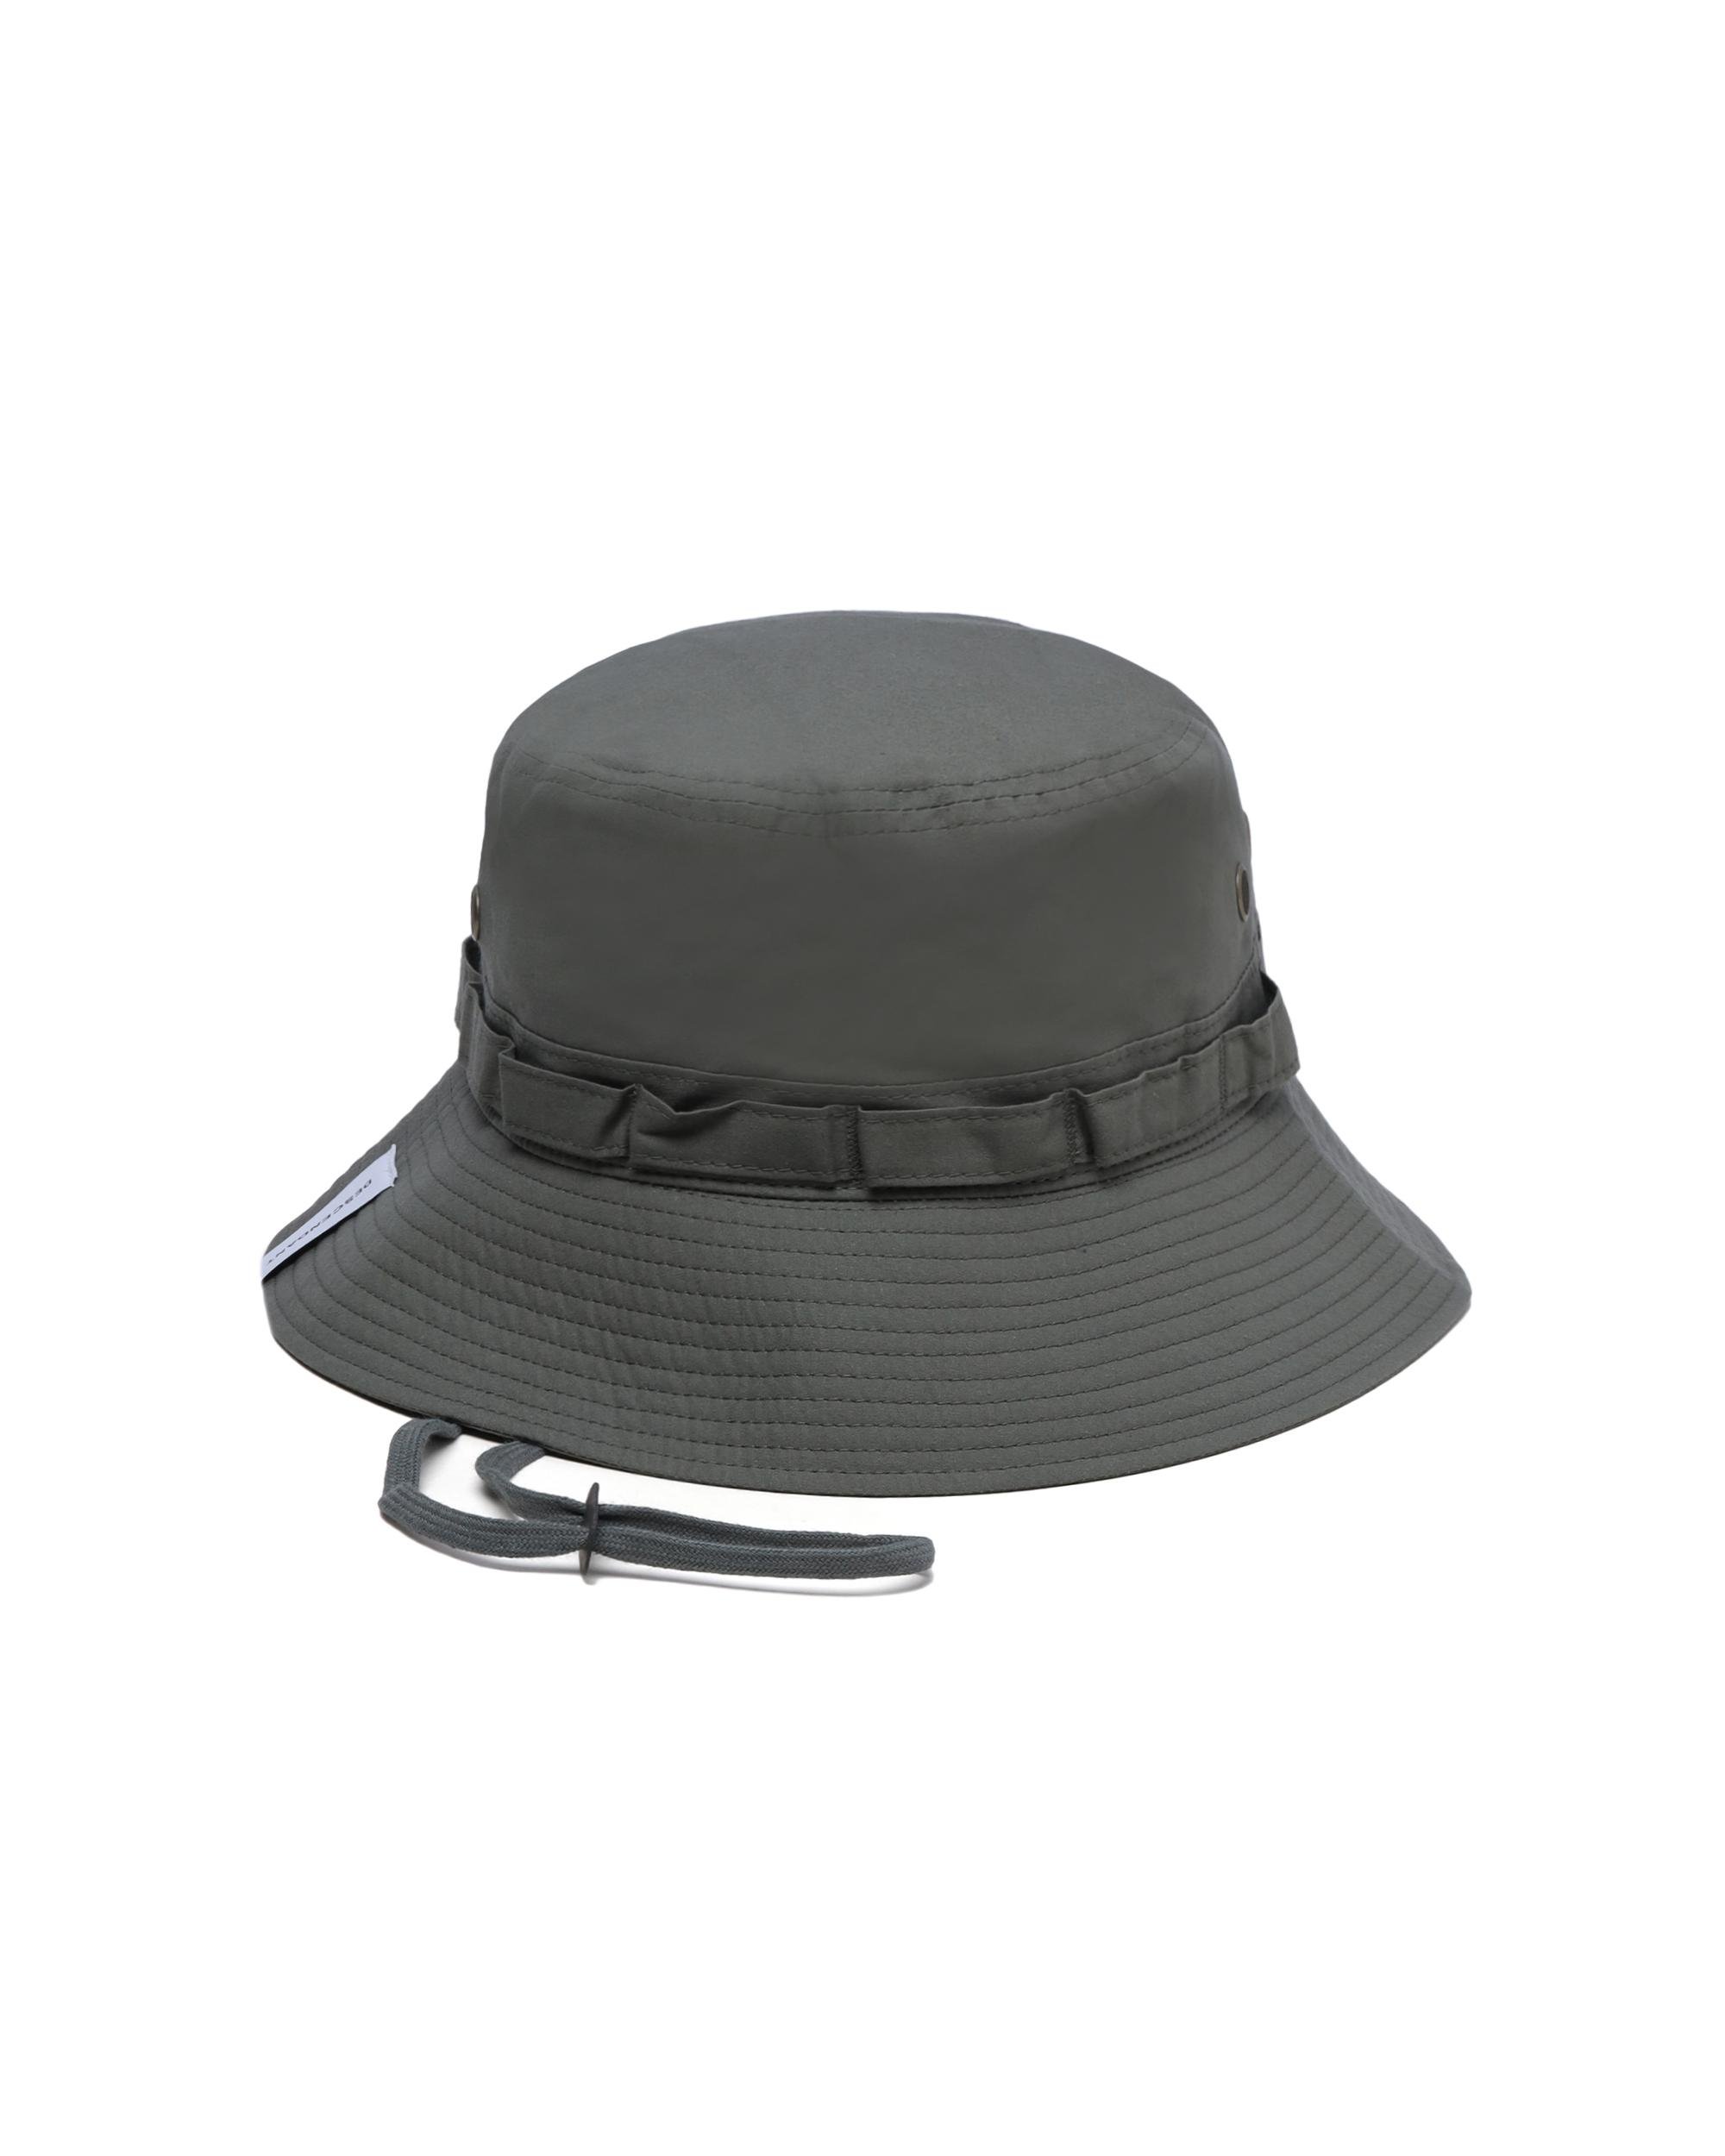 Chin strap bucket hat by DESCENDANT